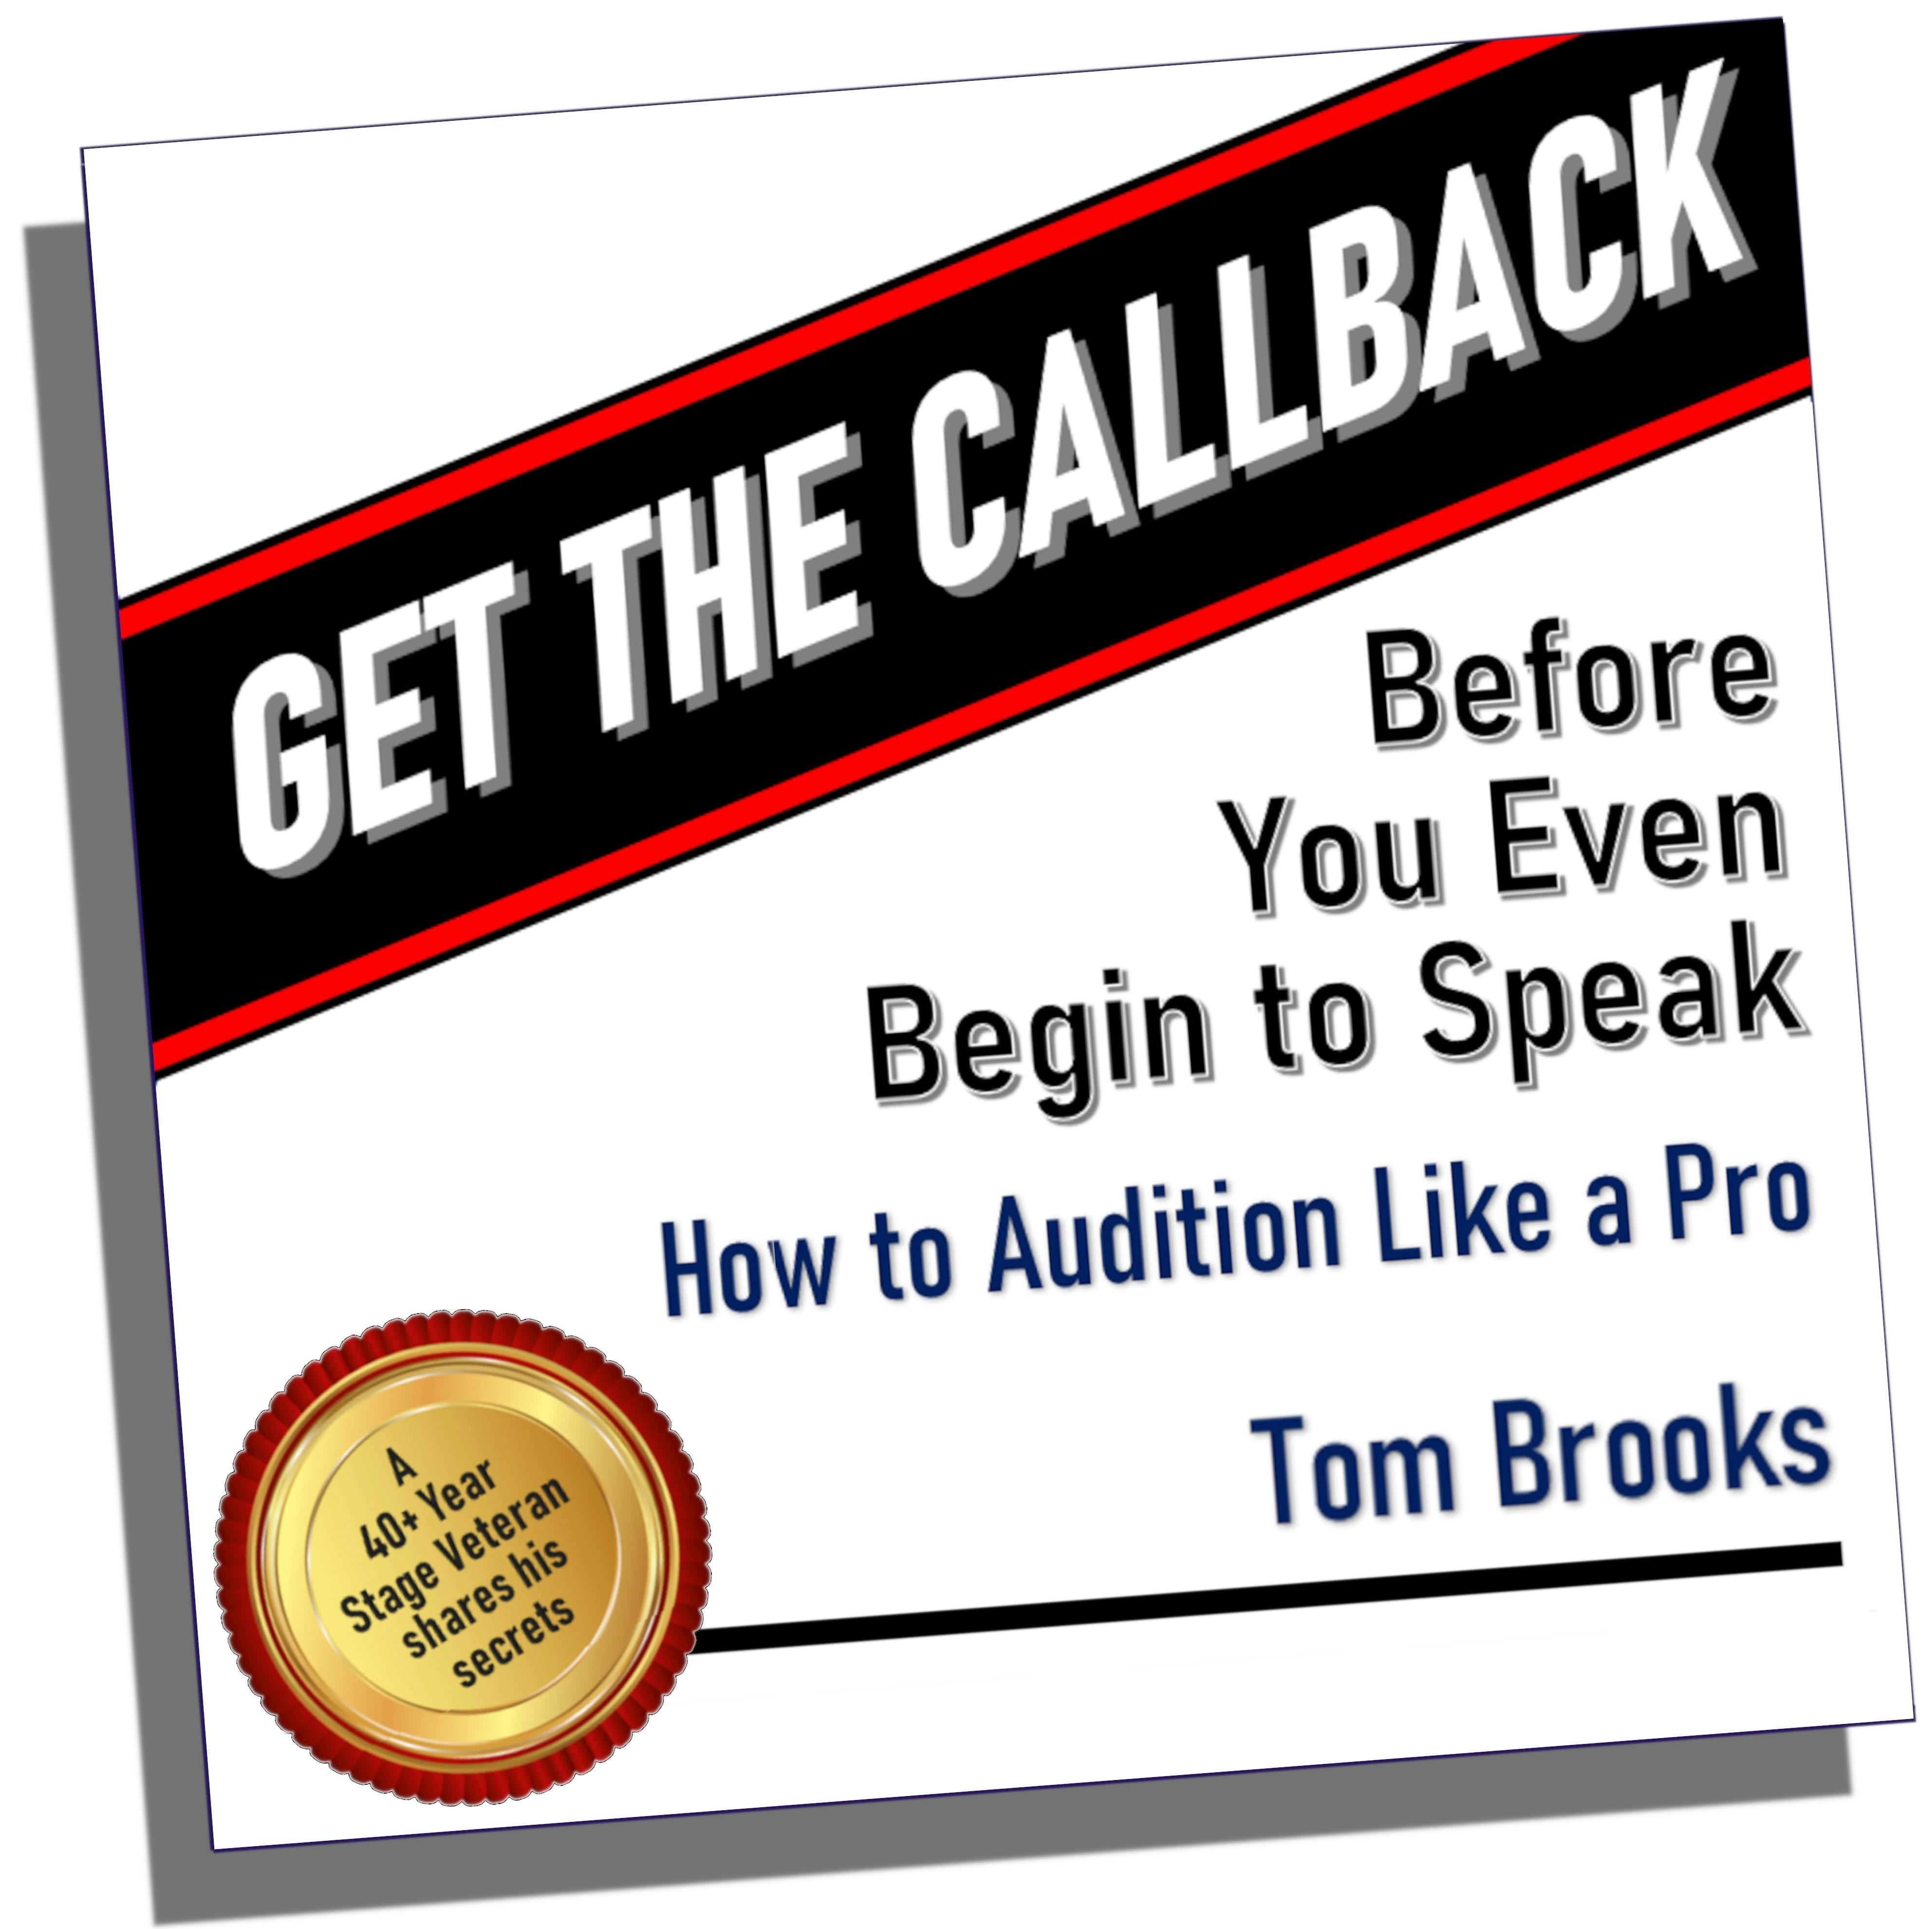 Get the Callback Before You Even Begin to Speak (Audiobook)